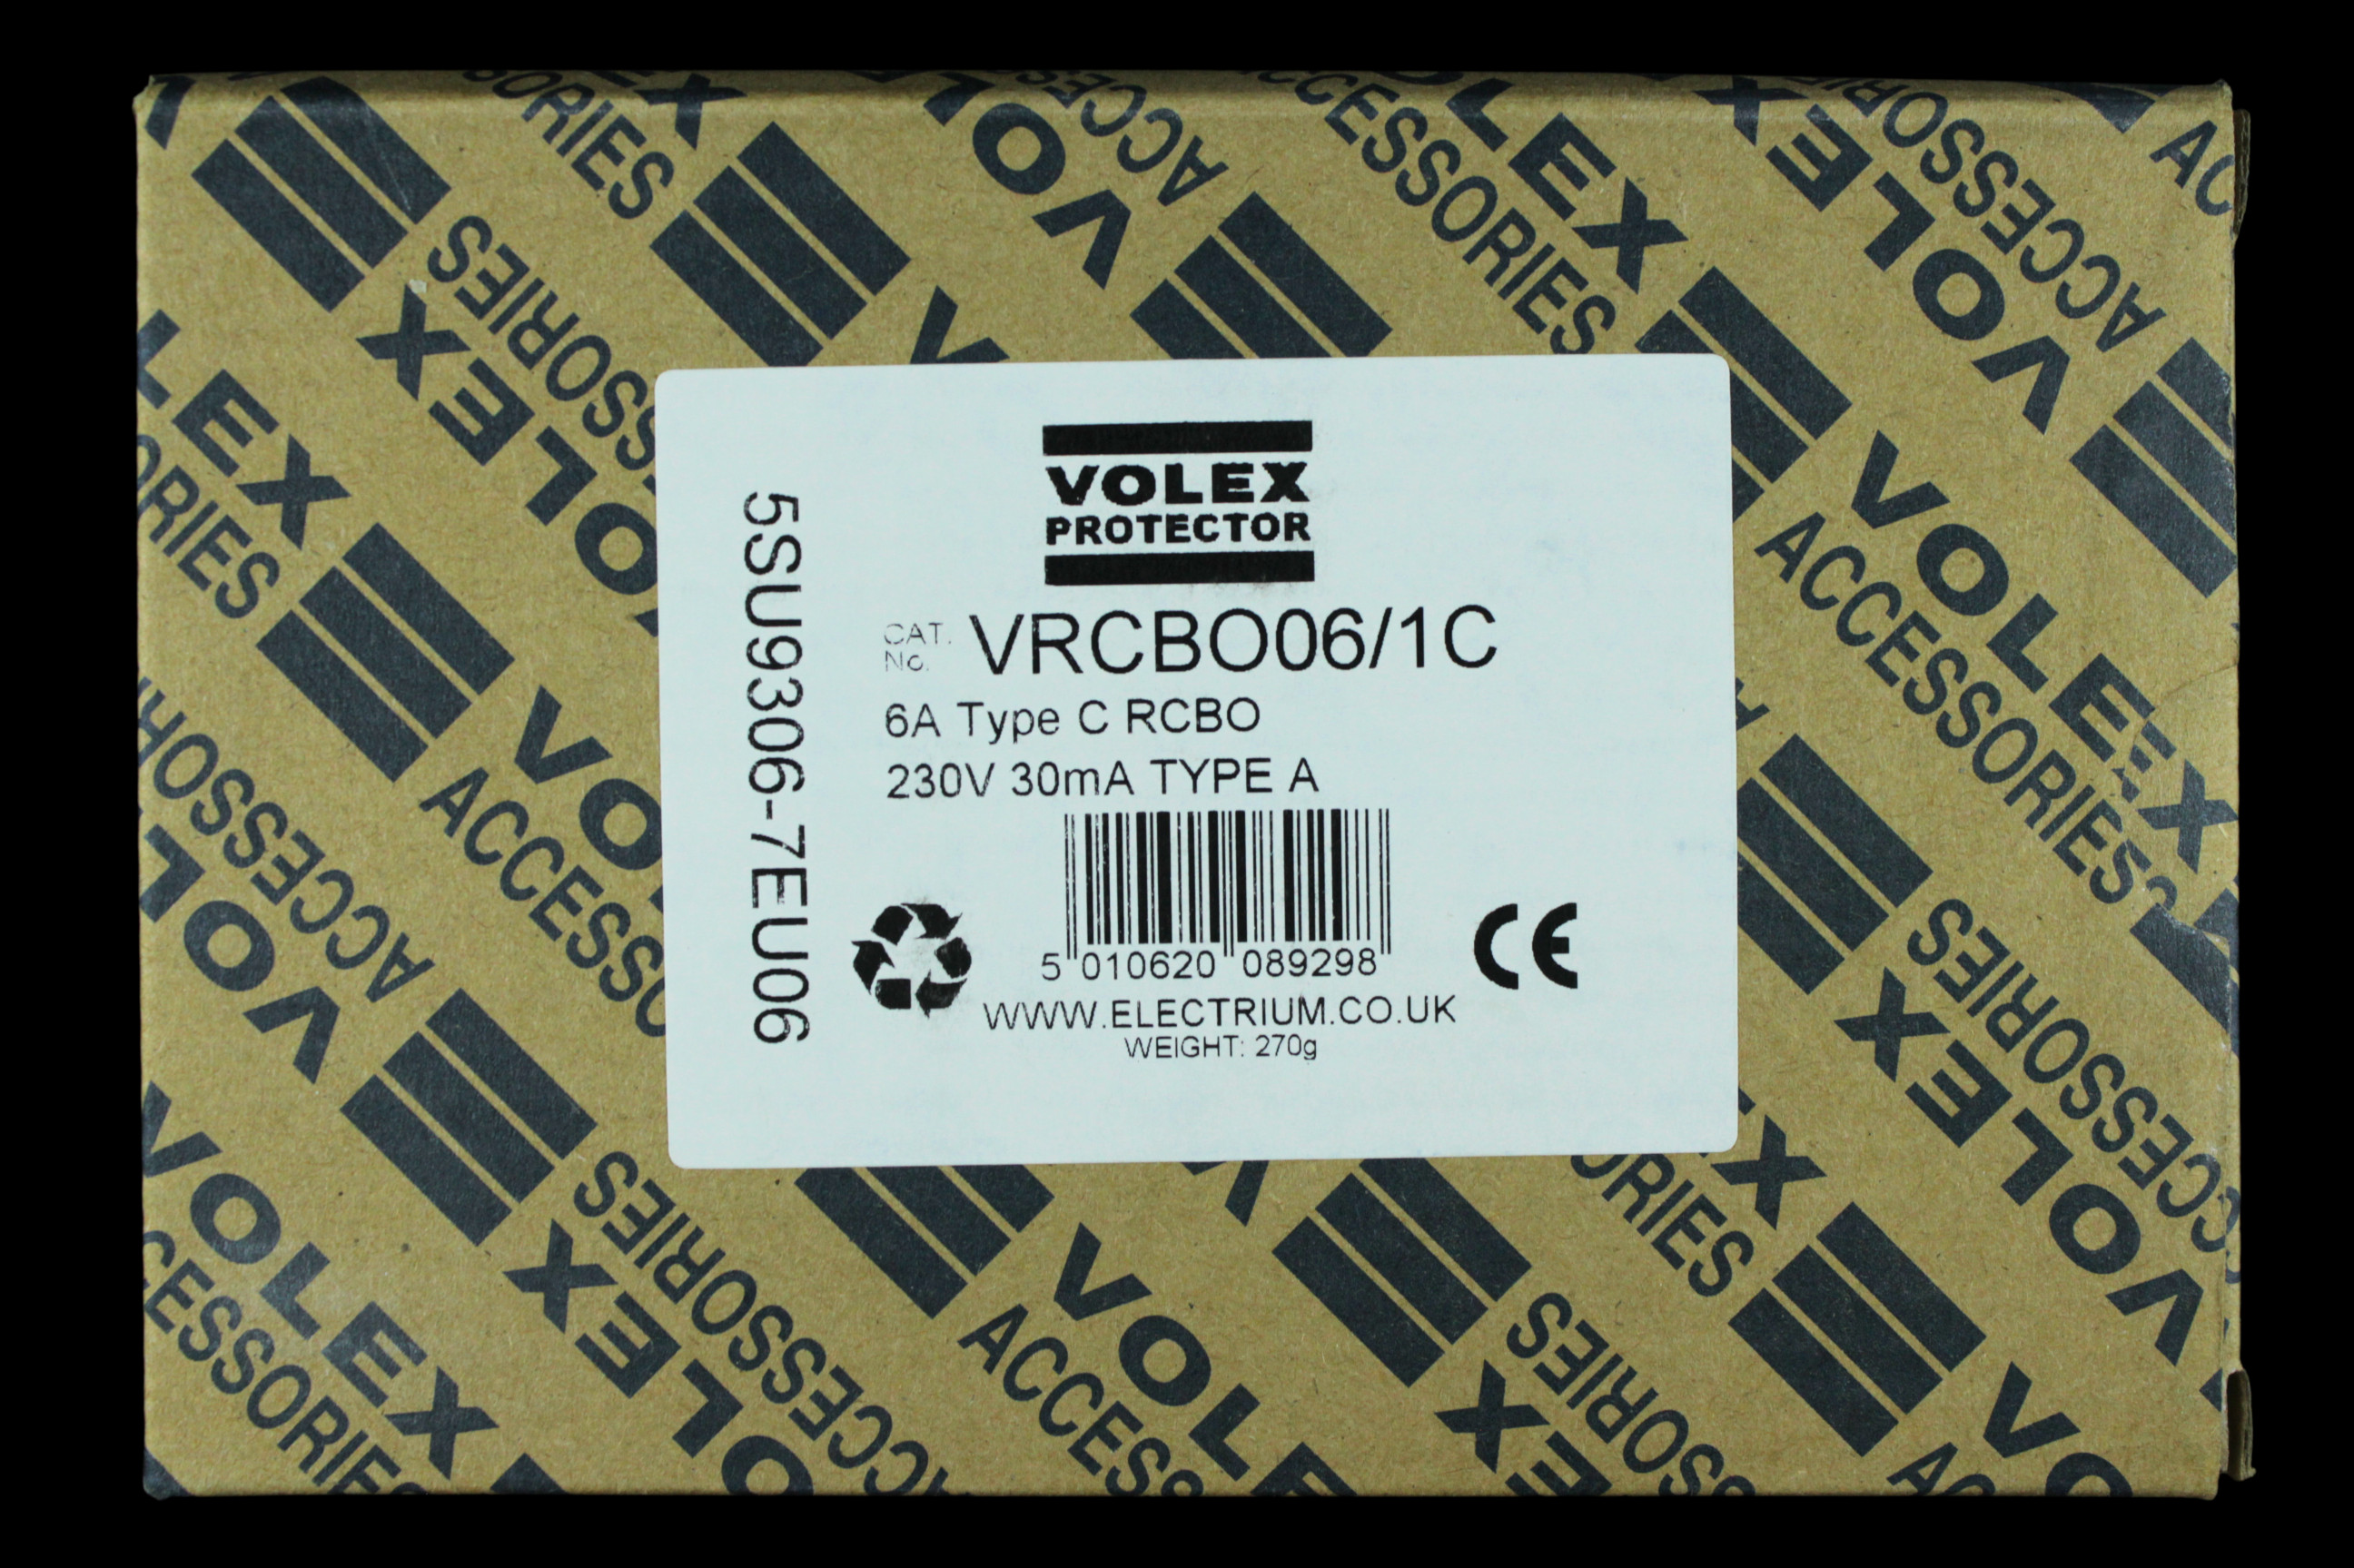 VOLEX 6 AMP CURVE C 6kA 30mA RCBO TYPE A VRCBO06/1C